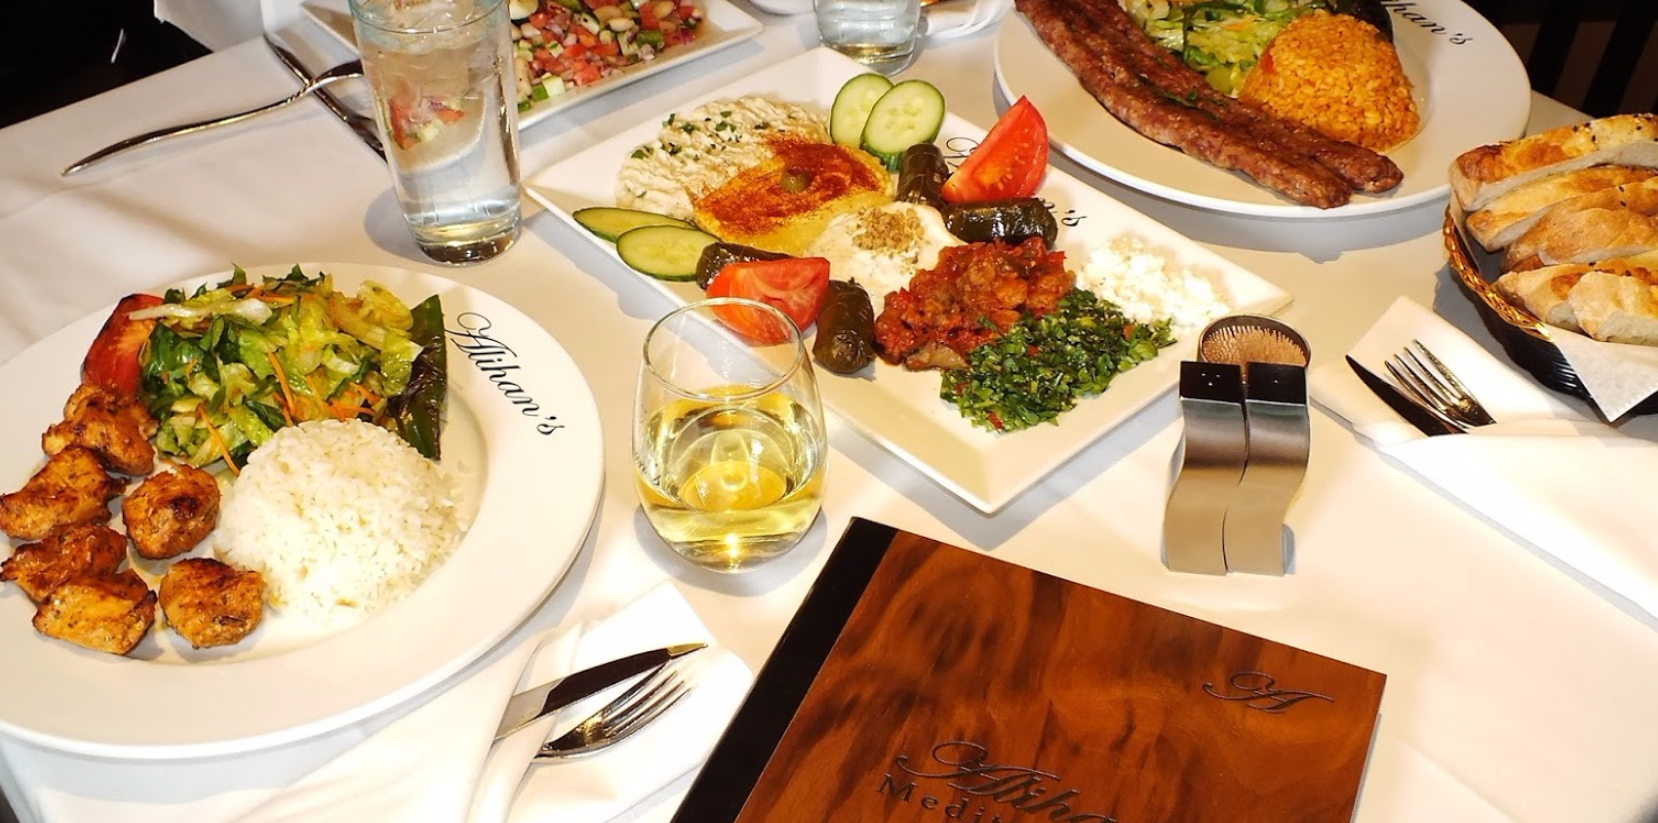 Alihan's Mediterranean Cuisine Photo